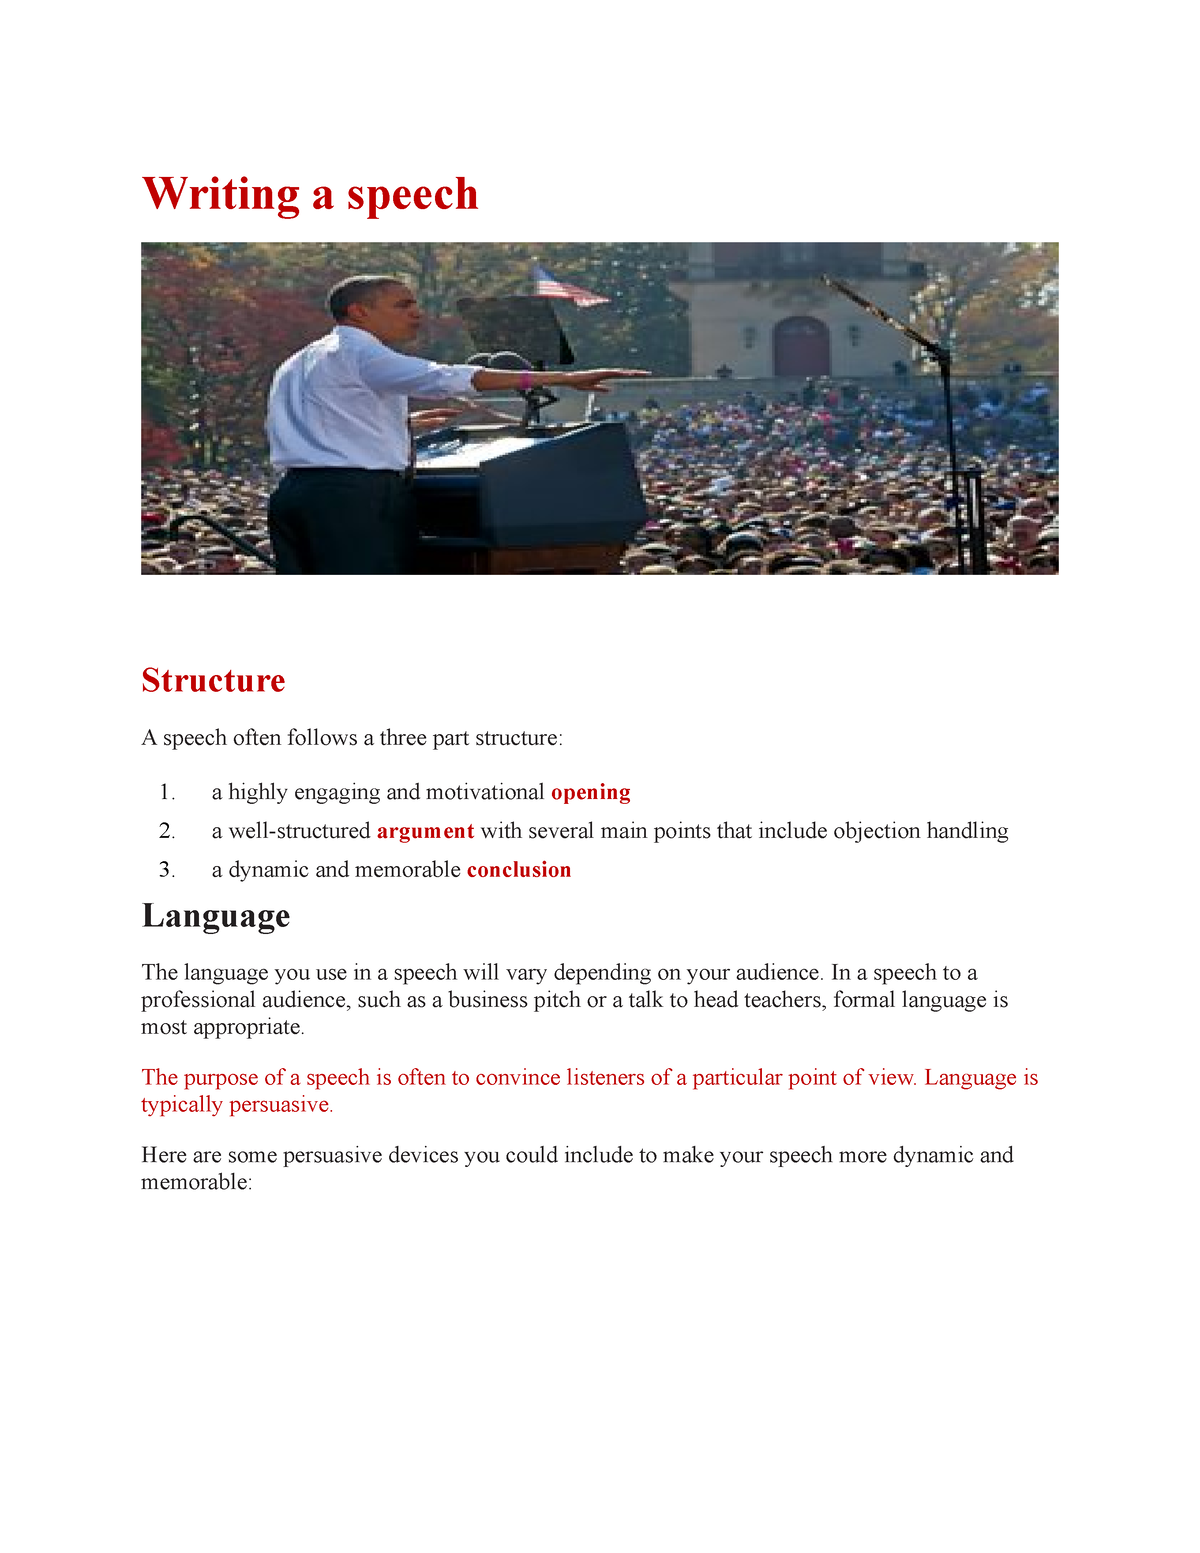 writing a speech also follows a